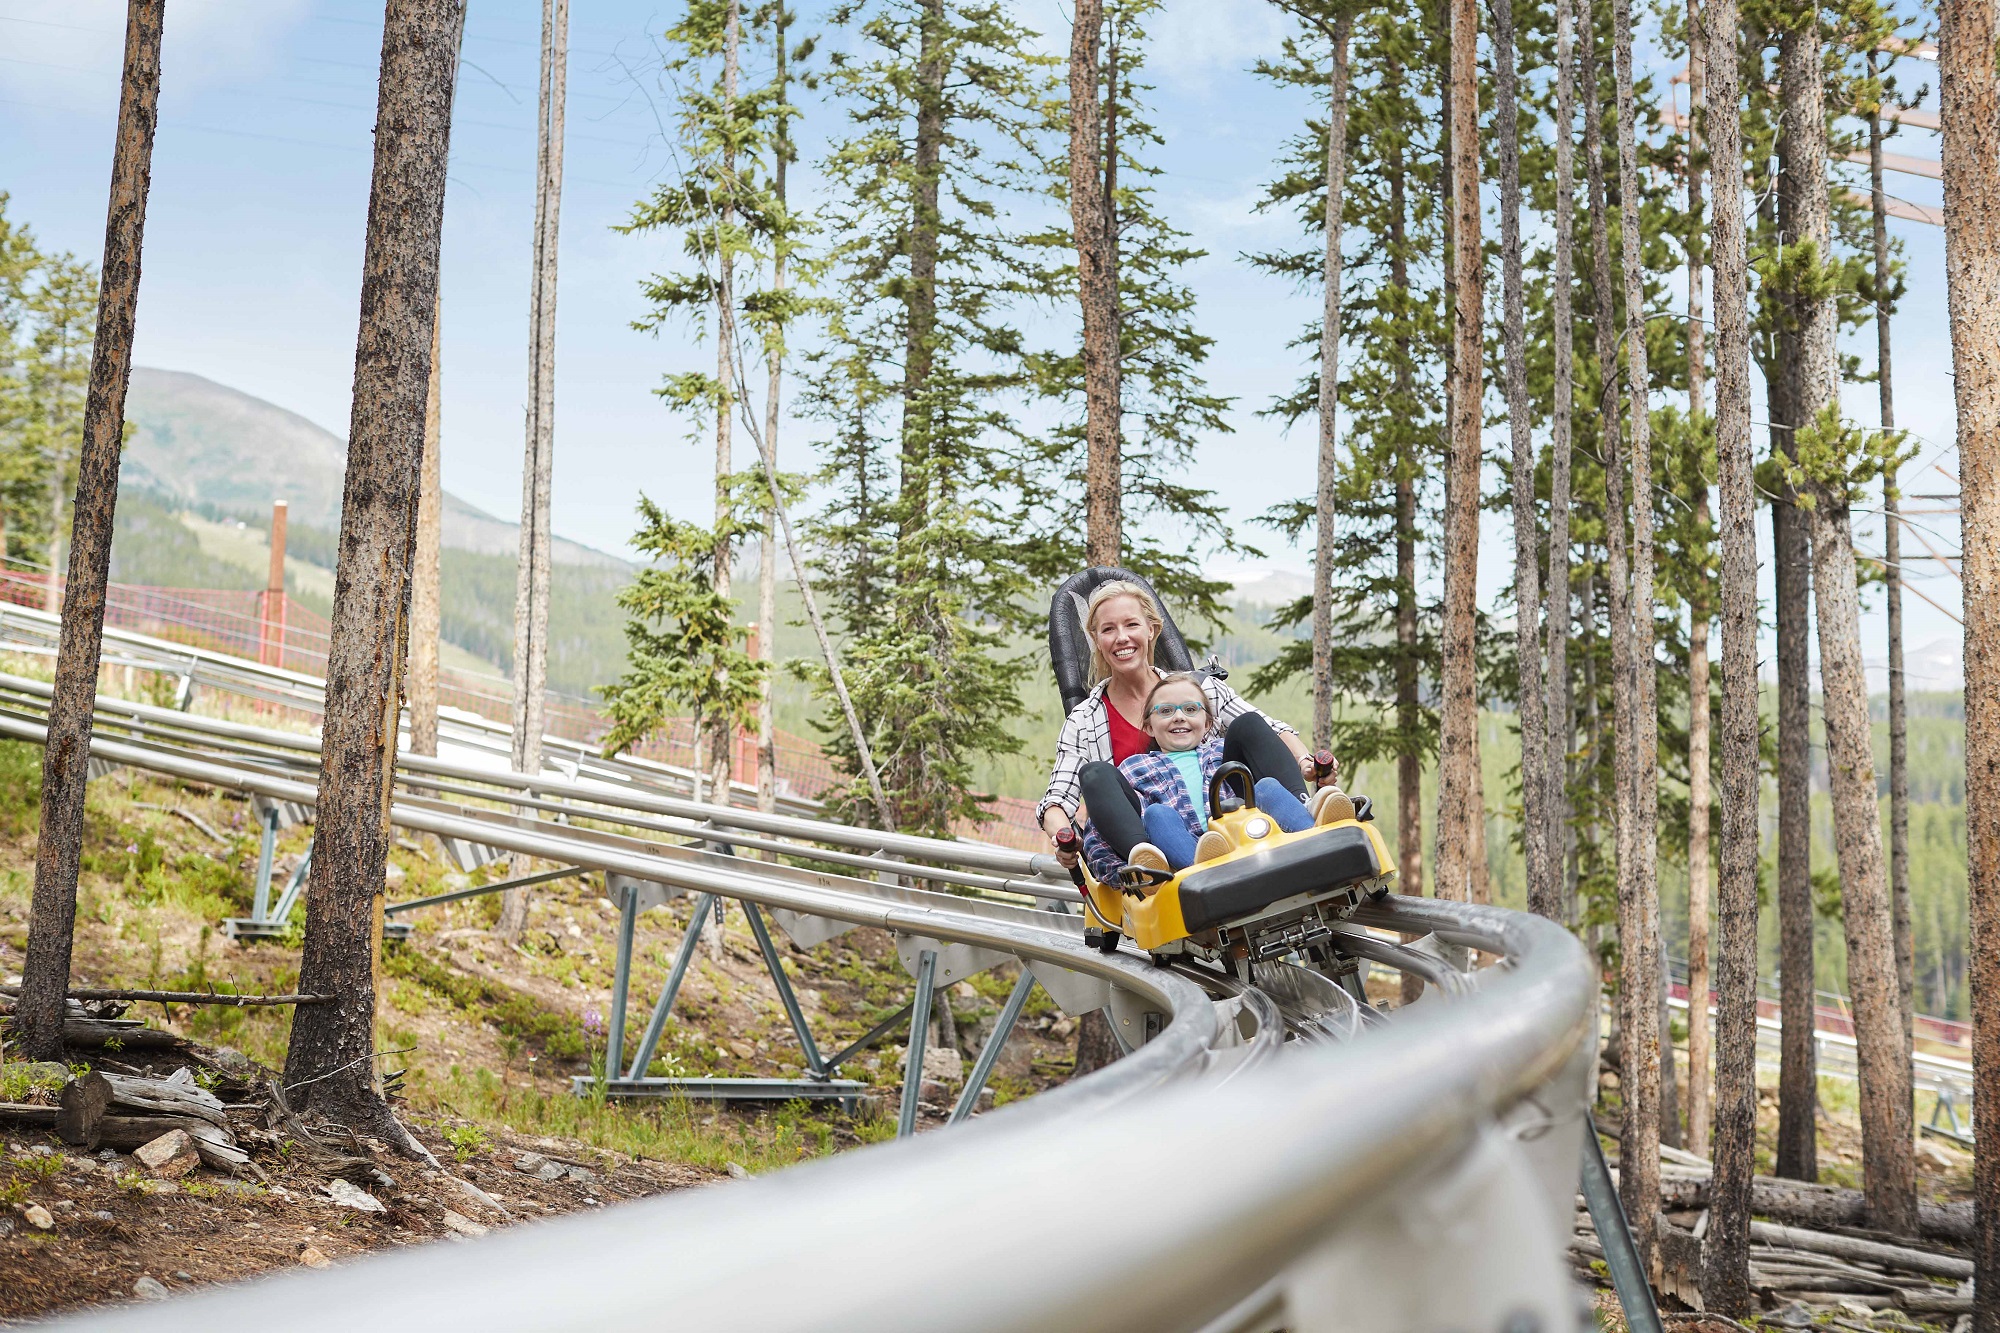 Epic Discovery Breckenridge Ski Resort Alpine Coaster